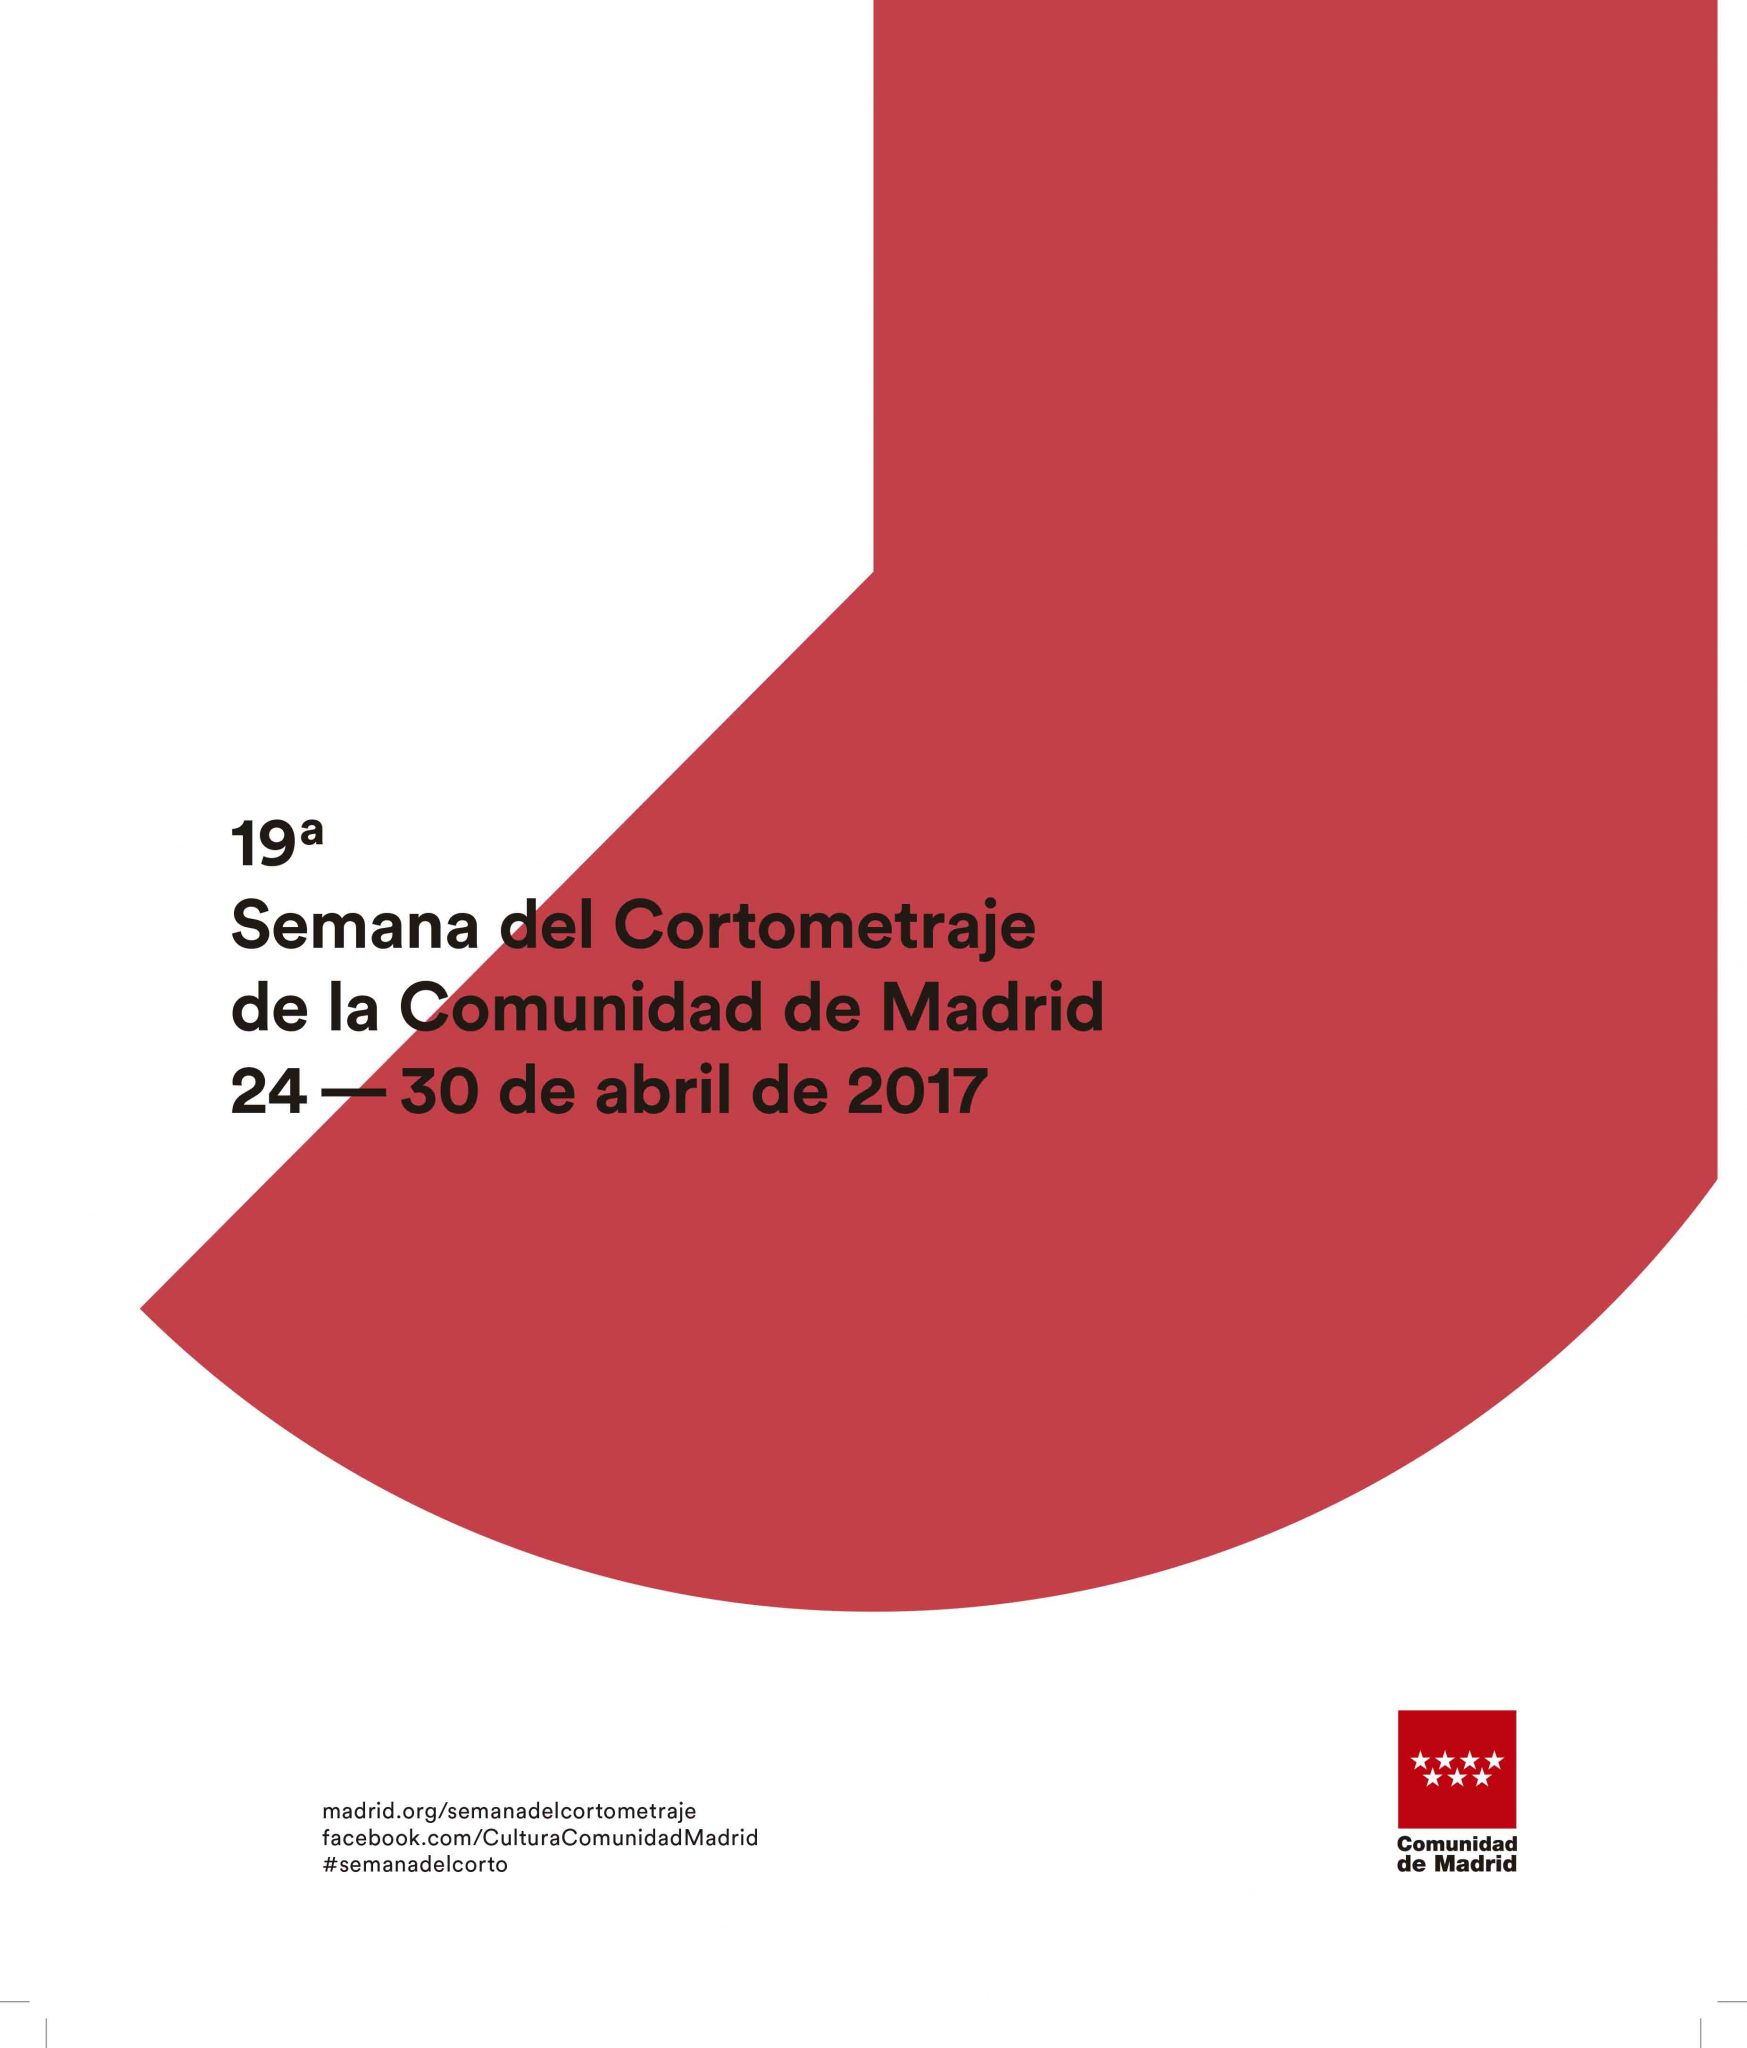 Palmarés de la Semana del Cortometraje de la Comunidad de Madrid